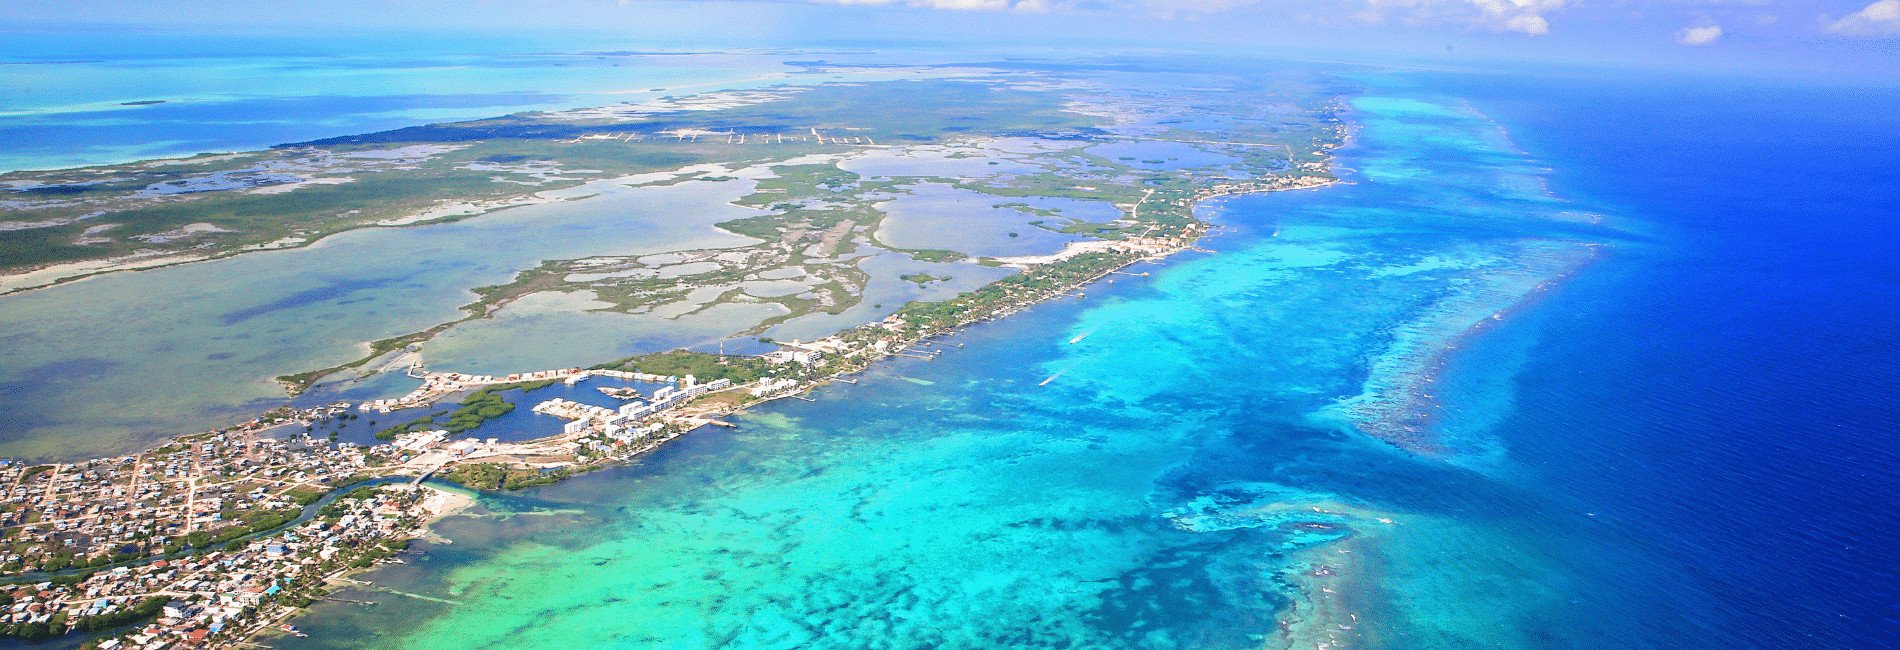 Cancun Drone view